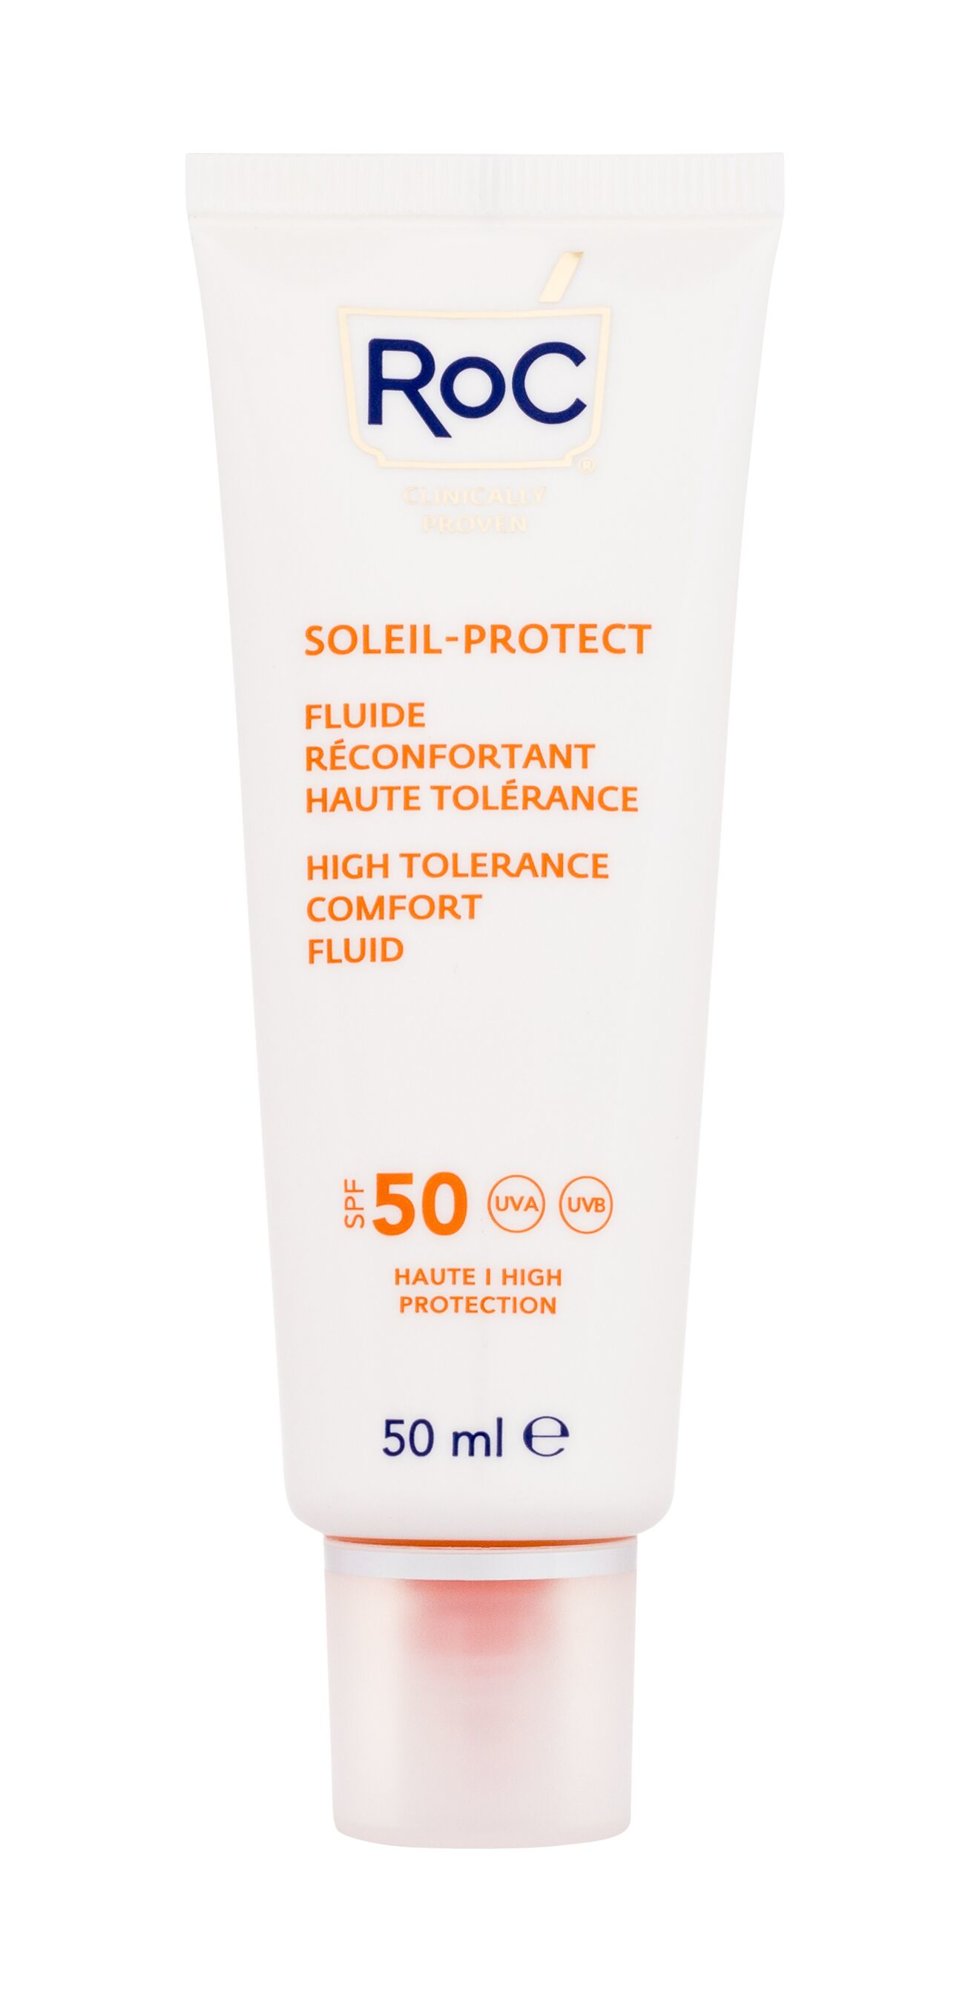 RoC Soleil-Protect High Tolerance Comfort Fluid 50ml veido apsauga (Pažeista pakuotė)